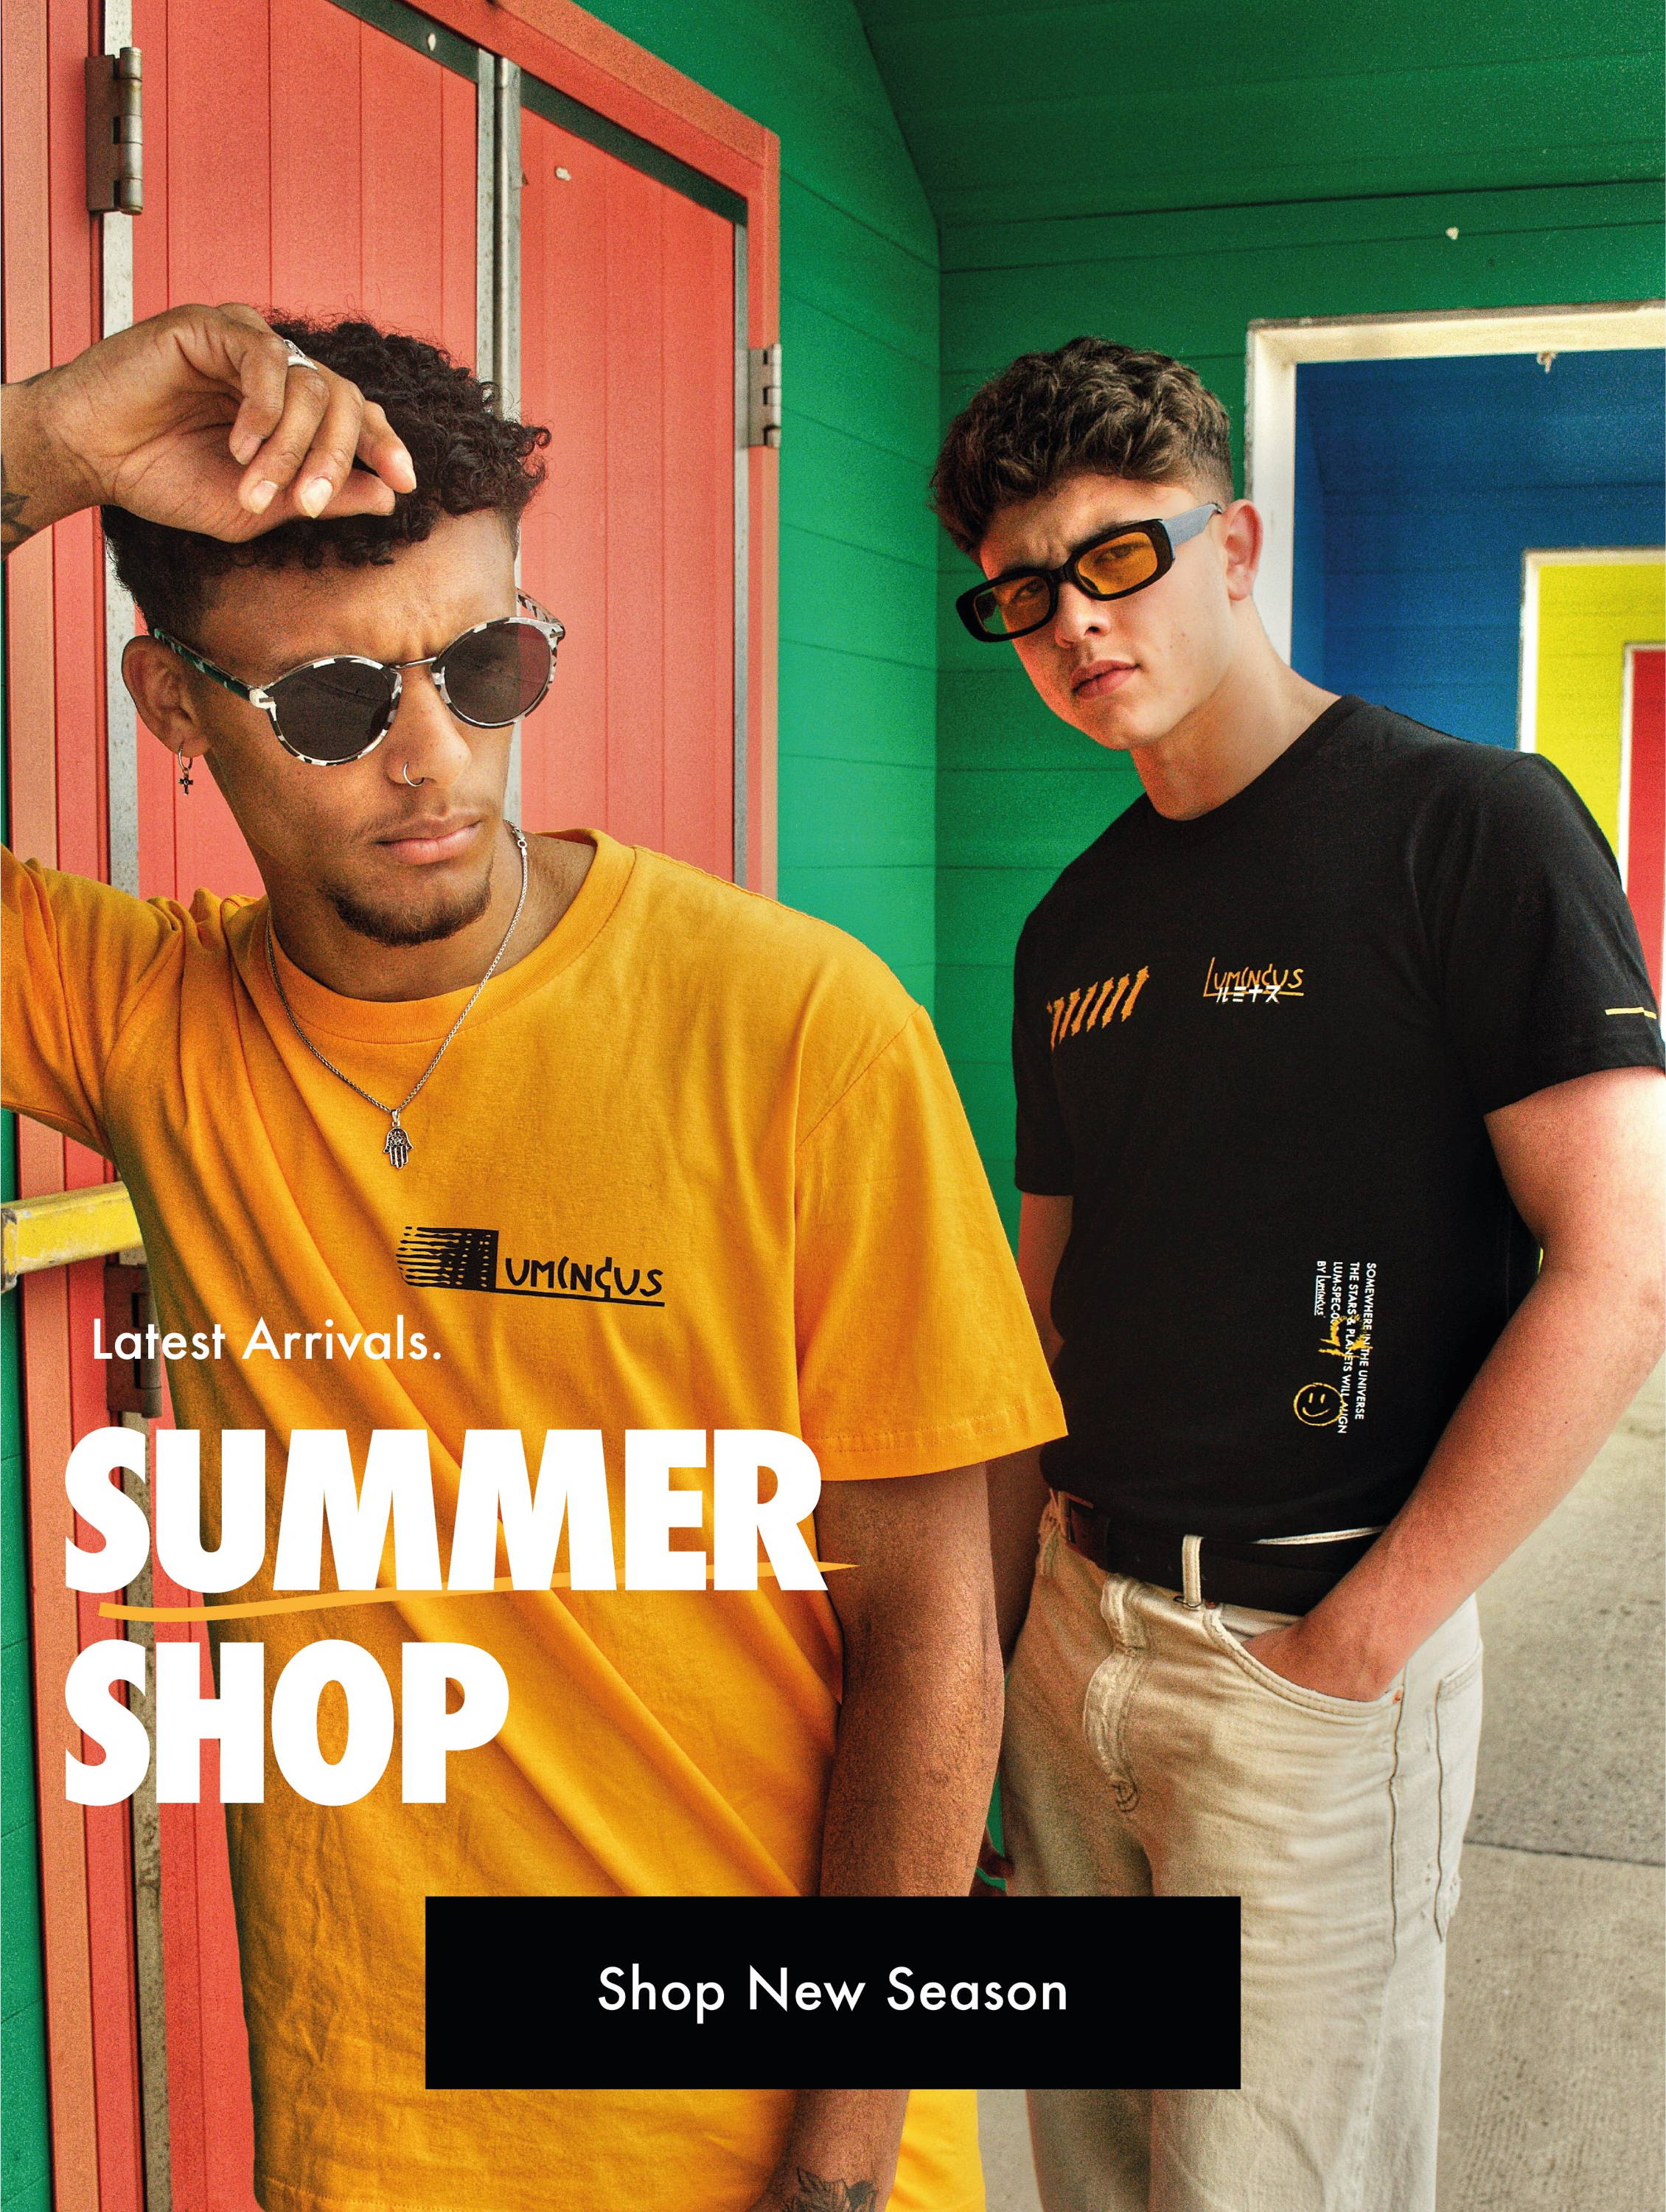 Summer Shop - Shop New Season